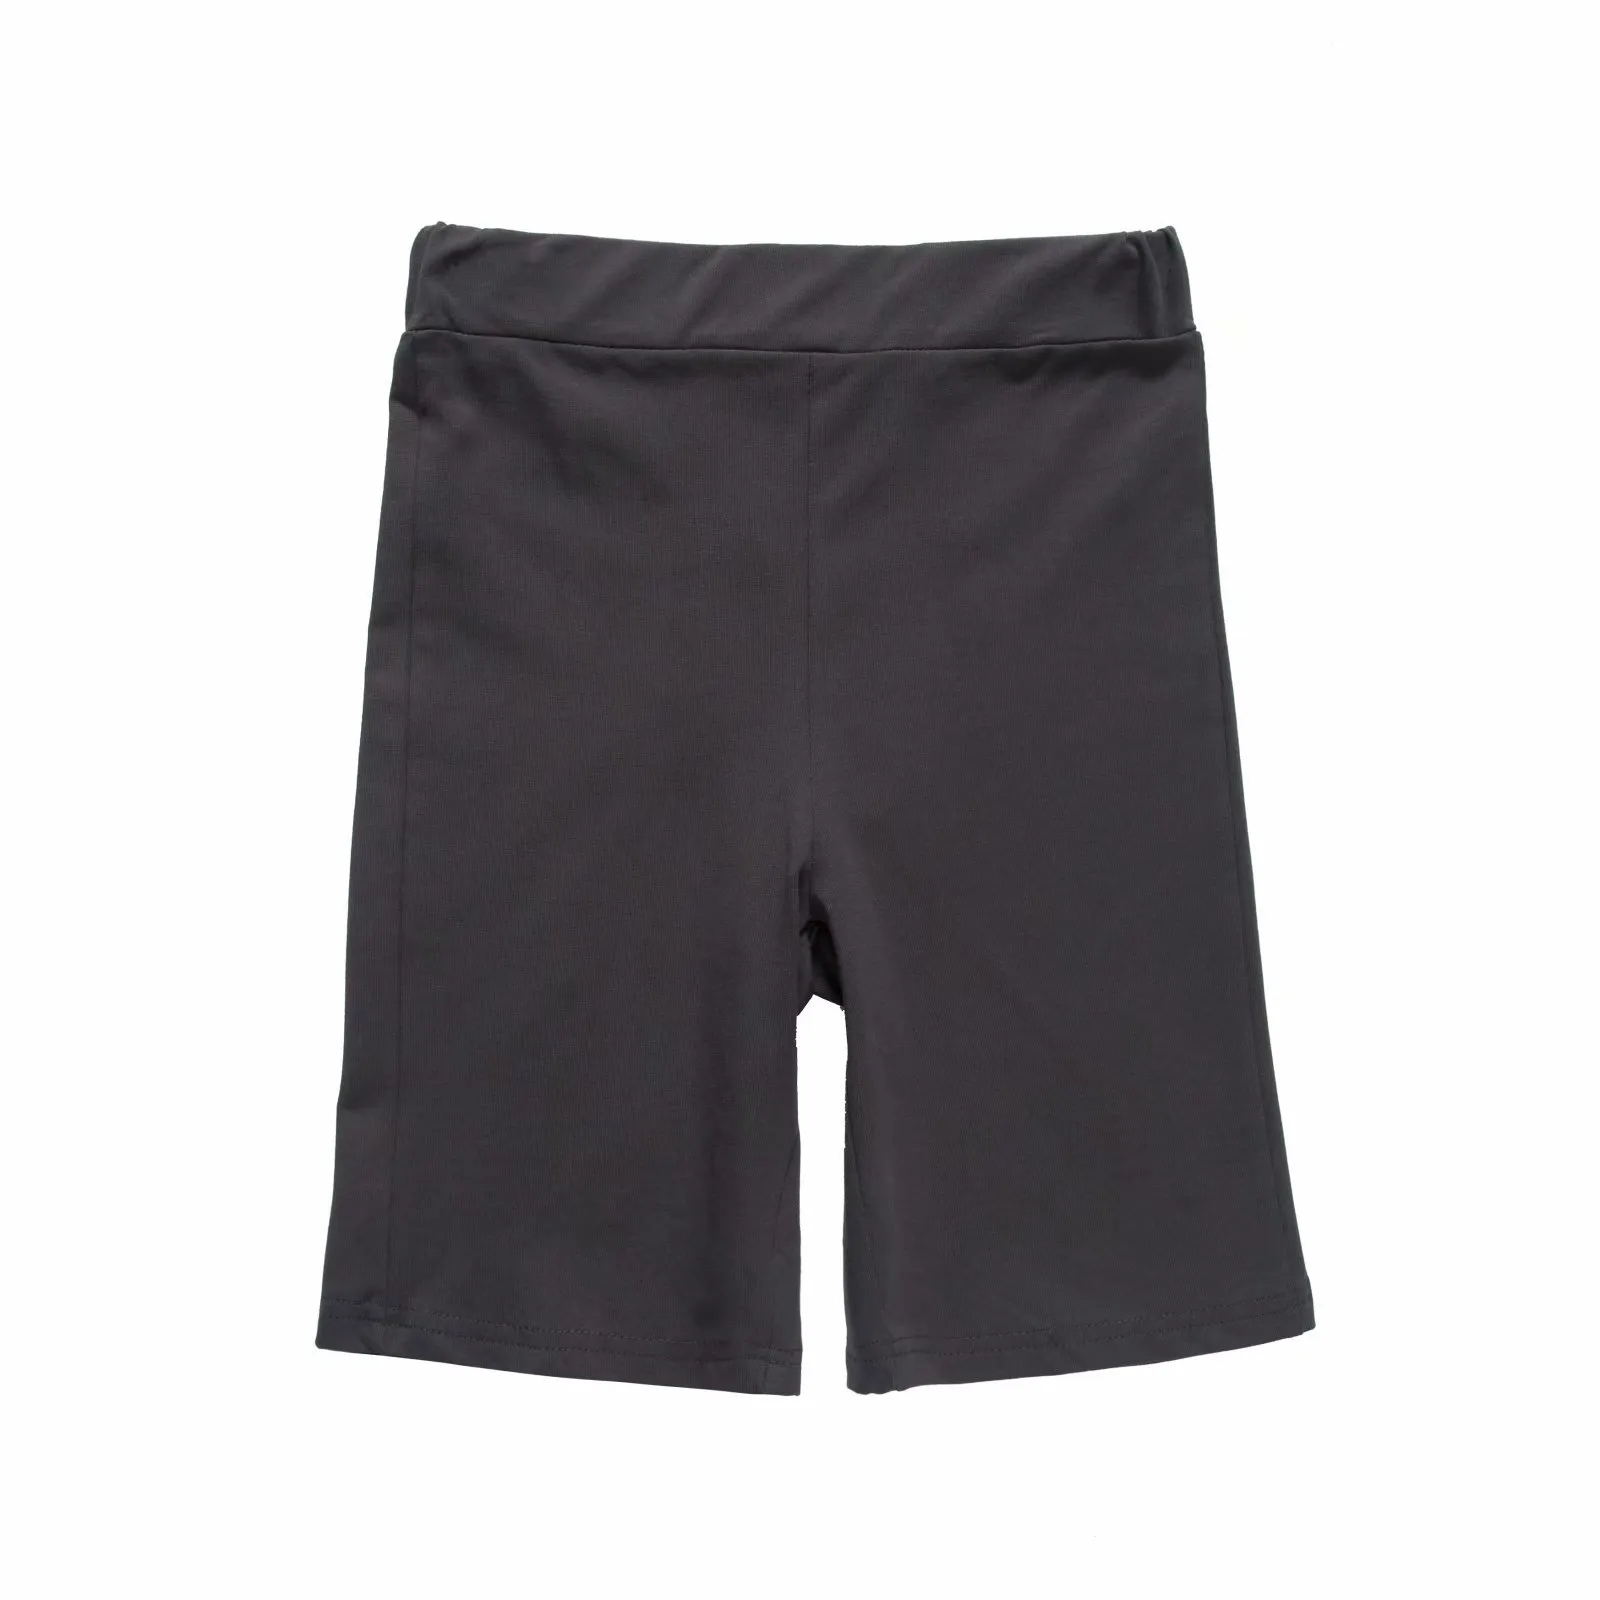 Forward Sportswear - ភ្ជុំបិណ្ឌ Promotion 💥😯 Forward Sport Pants Short  Availabe Size S M L XL 🔥 Discount 30% off 🔥 𝟏𝟓̶.̶𝟗̶𝟗̶$̶ To 𝟏𝟏.𝟏𝟗$  👉🏻Order Now: 017 666 905, FB Page and